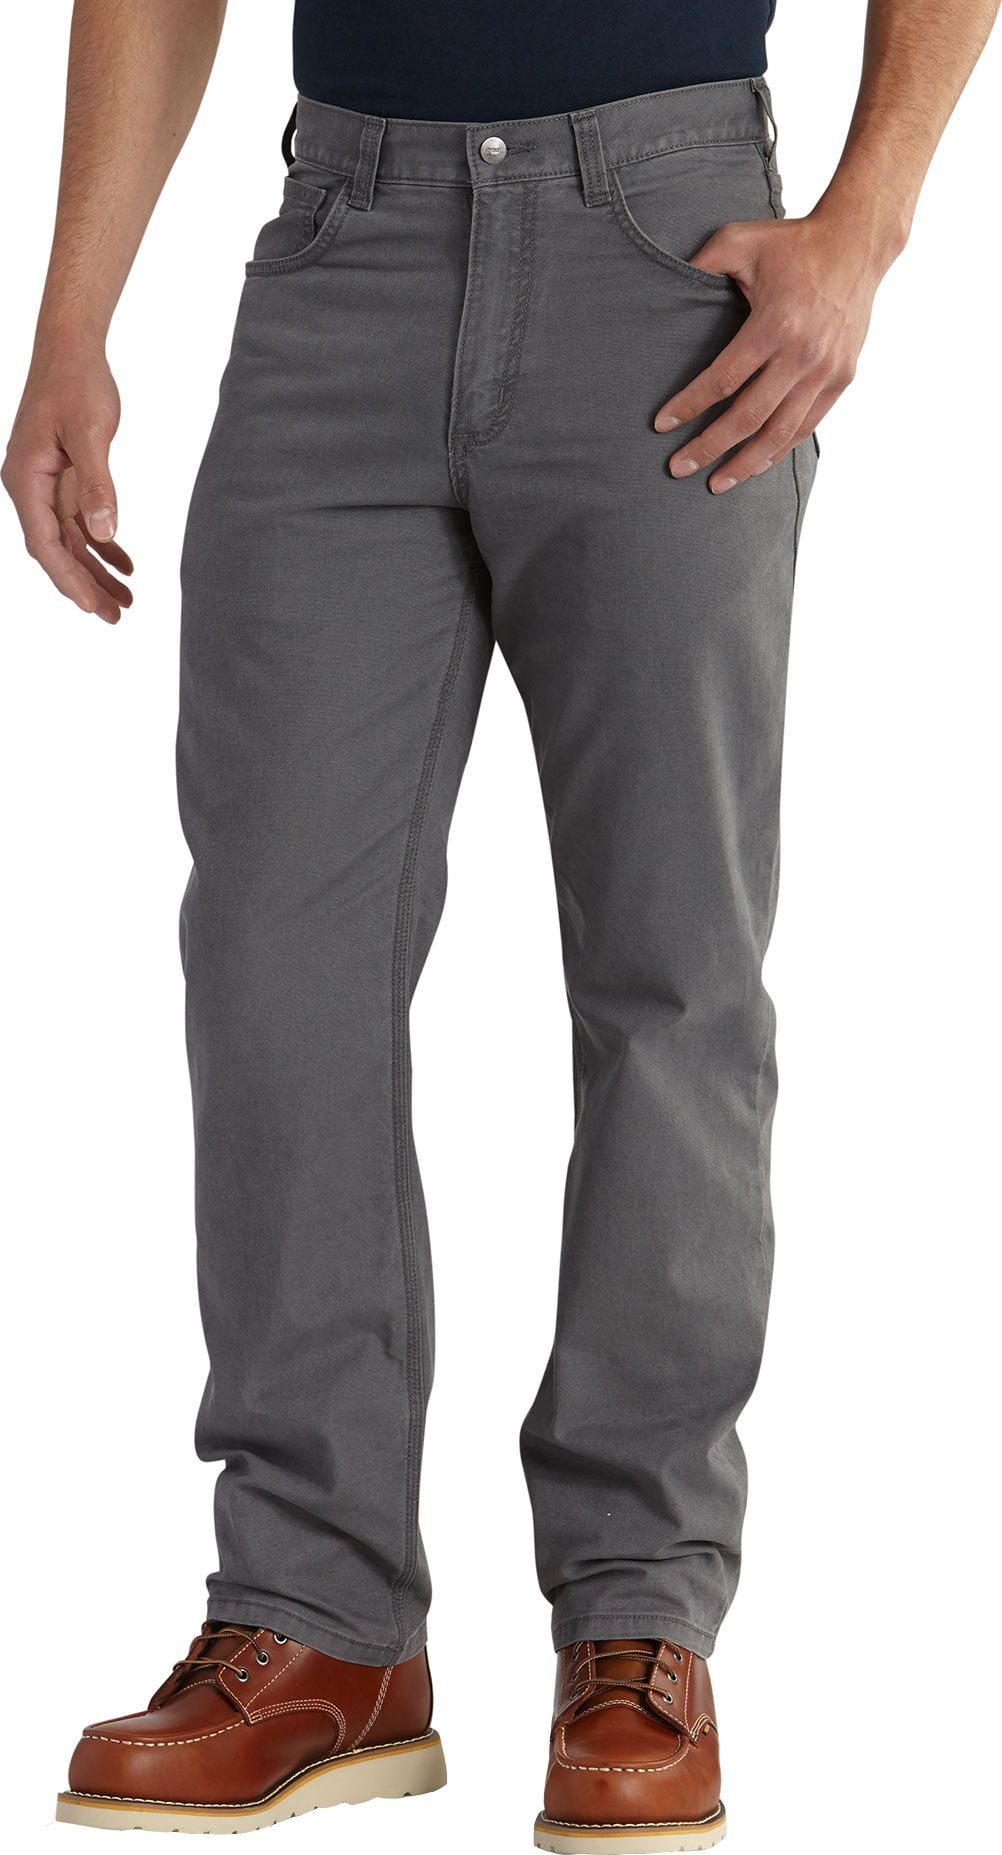 carhartt five pocket pants